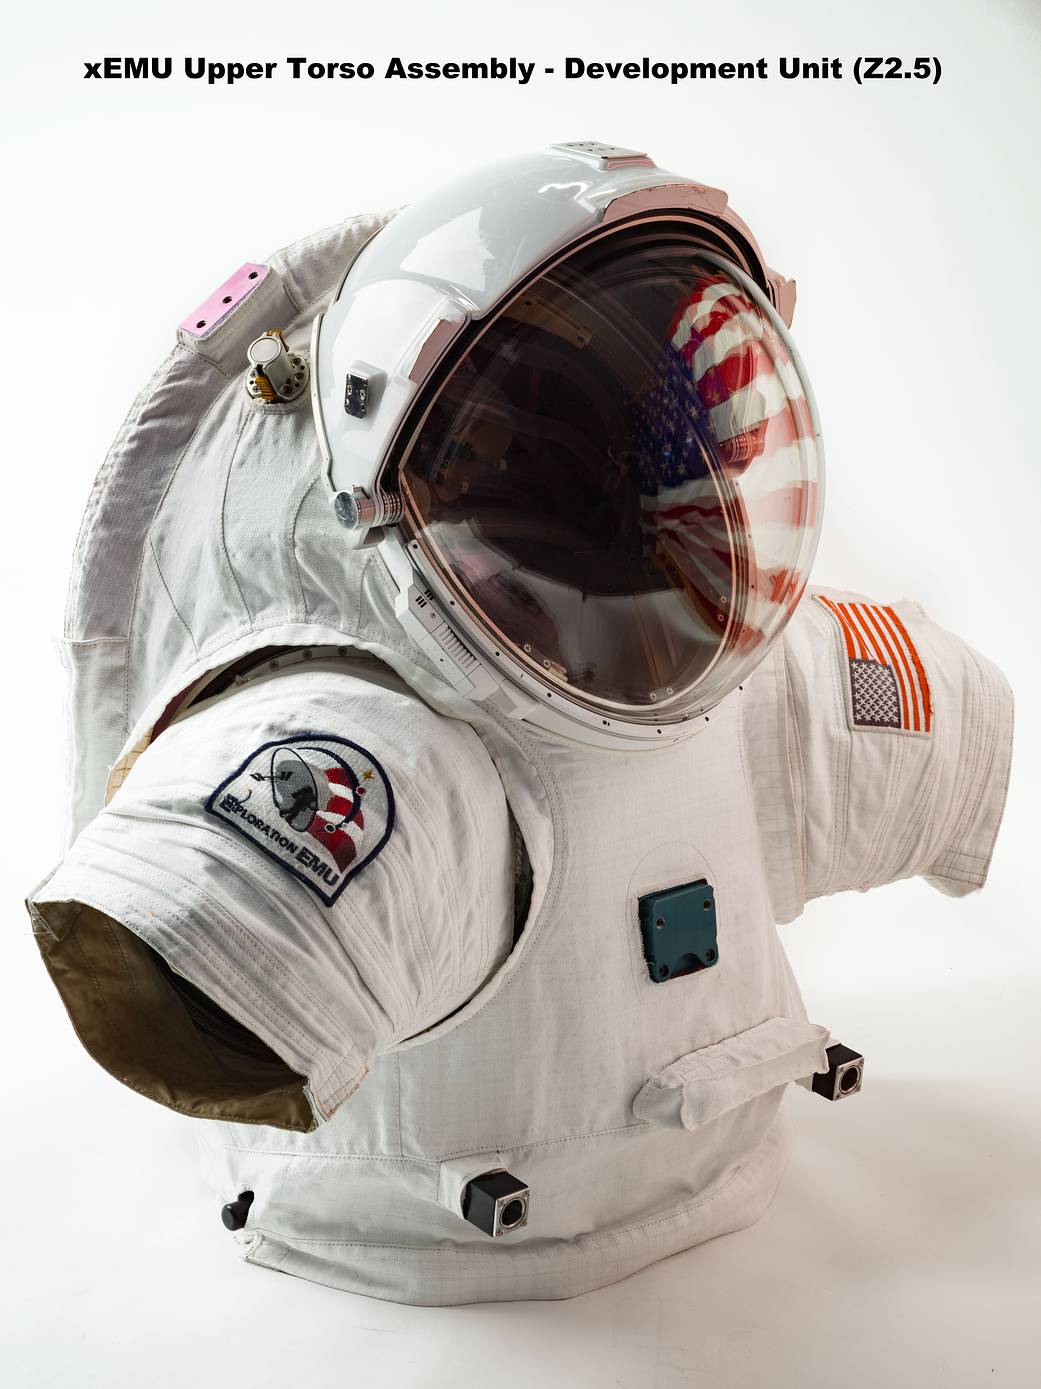 Development unit showing the upper torso and helmet.  (Image: NASA)